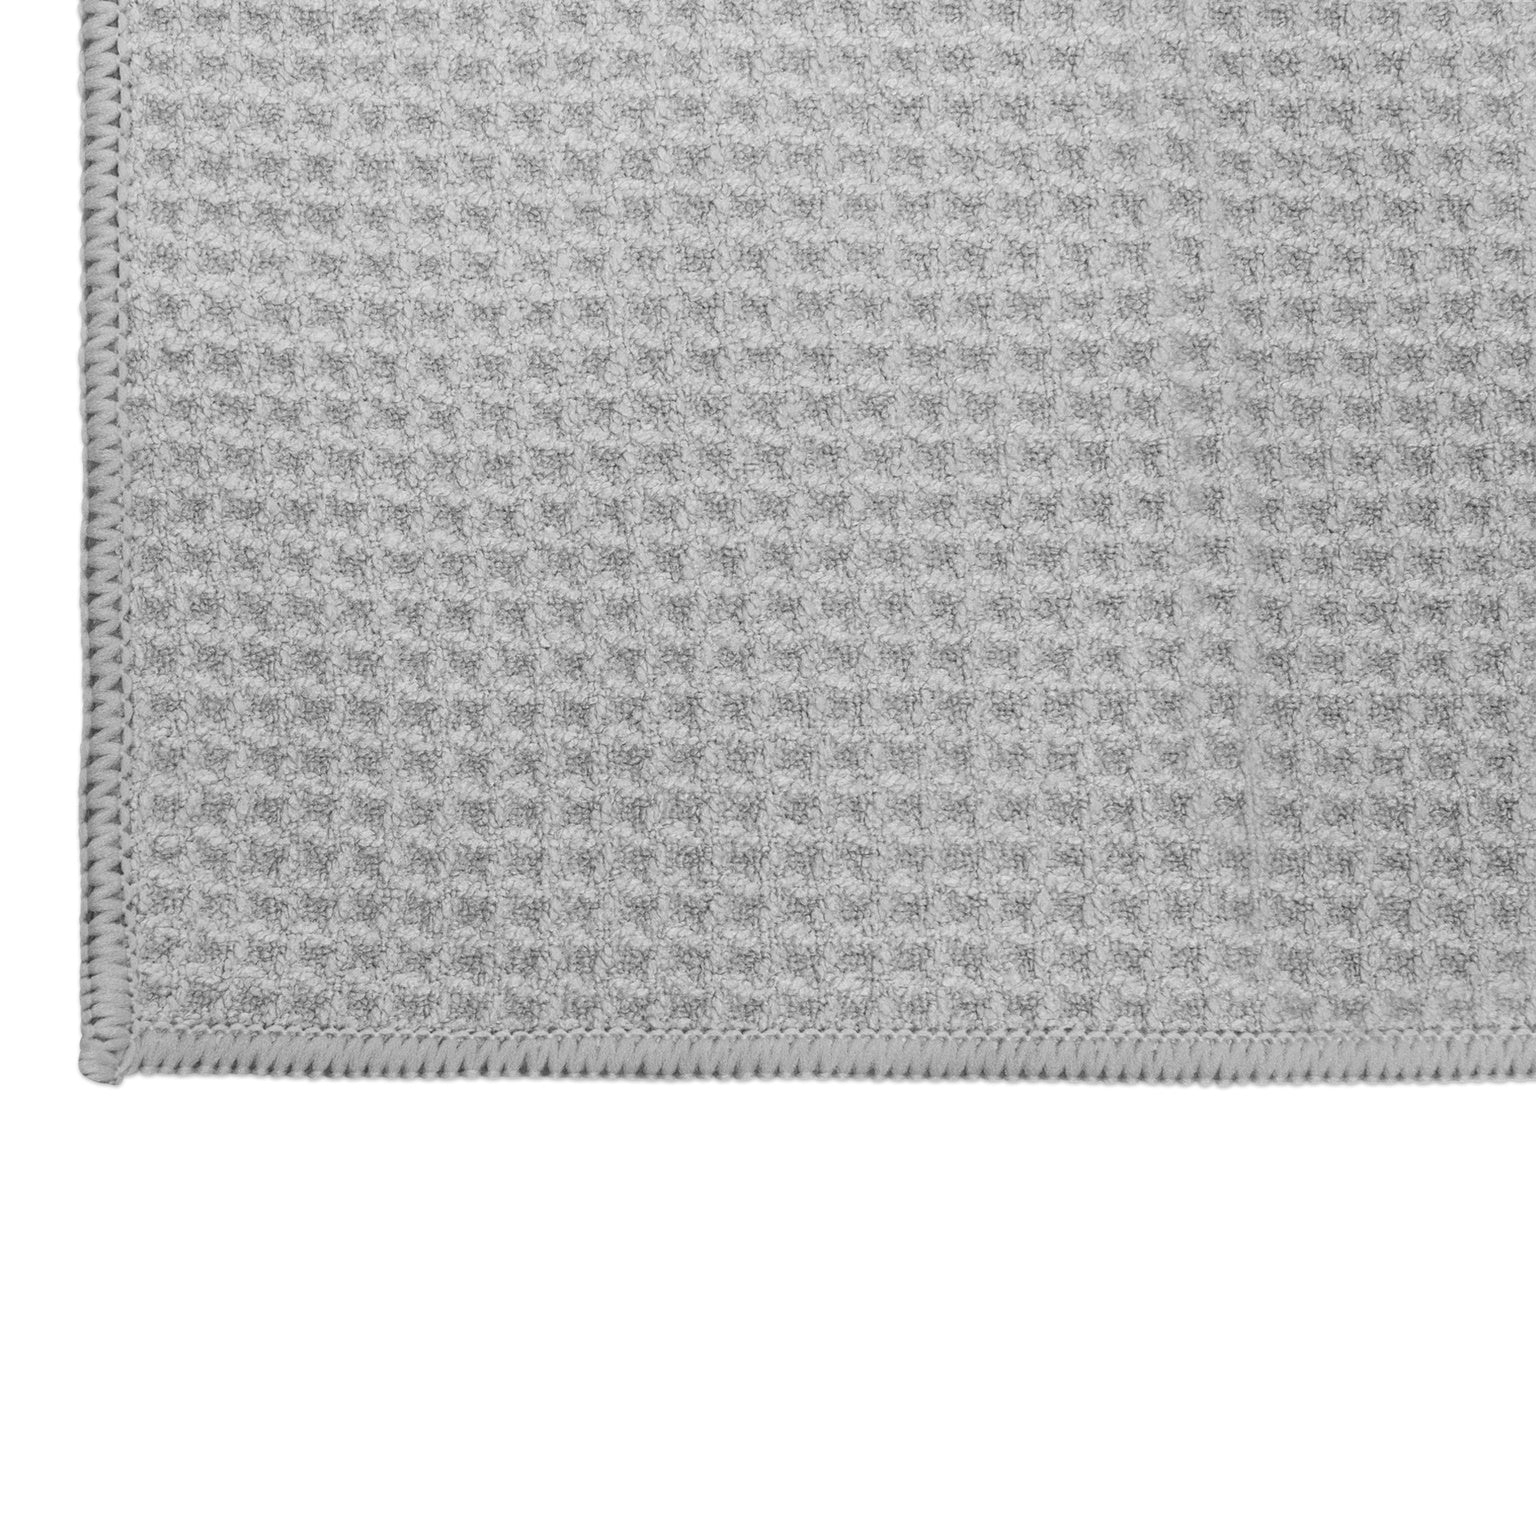 Toalla de Microfibra tejido estilo Waffle impresa de 16"x24" 